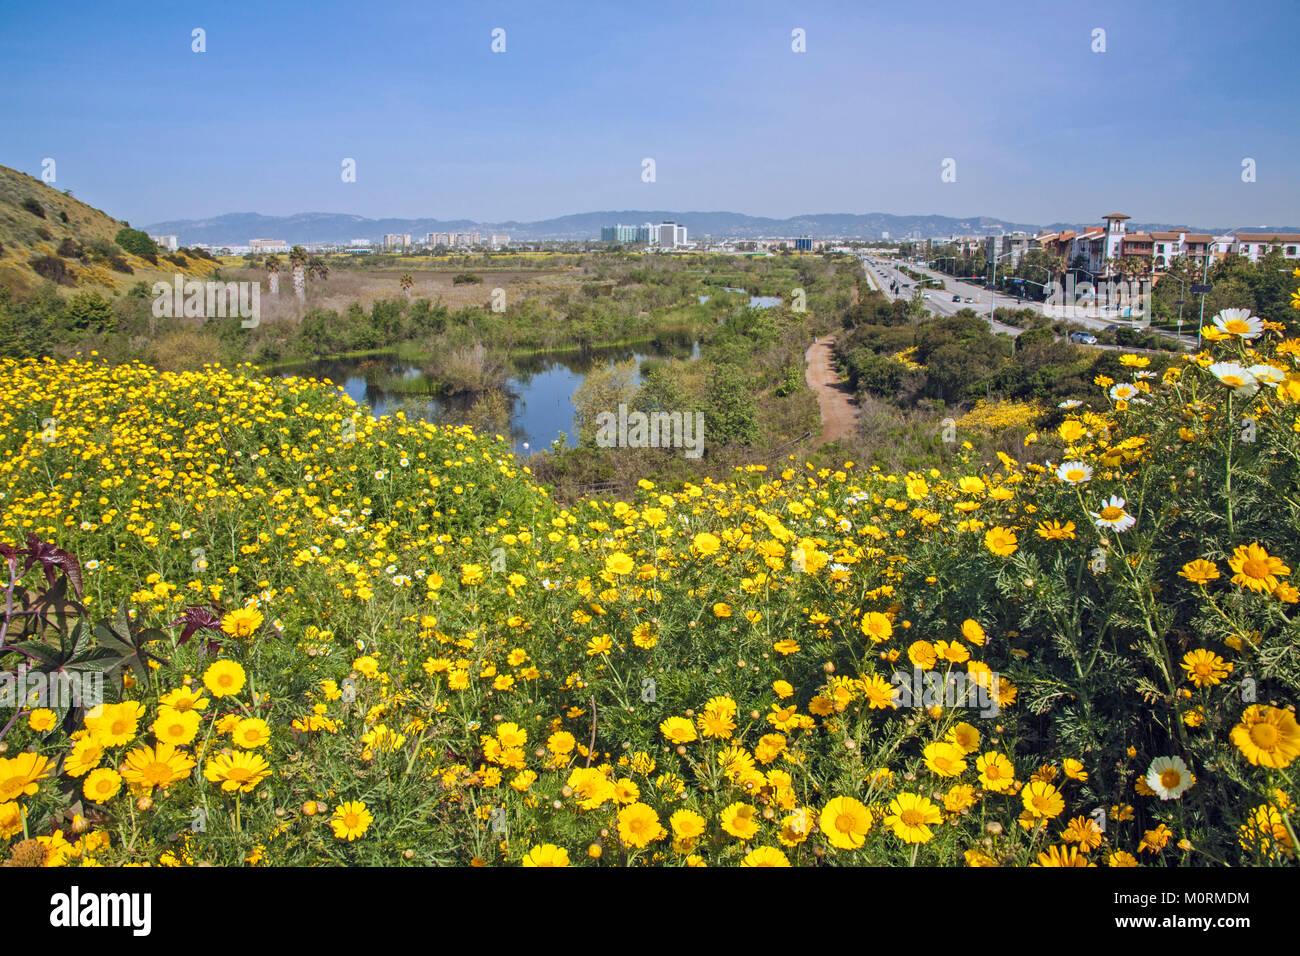 Ballona Wetlands and Playa Vista development, Los Angeles, California, USA Stock Photo